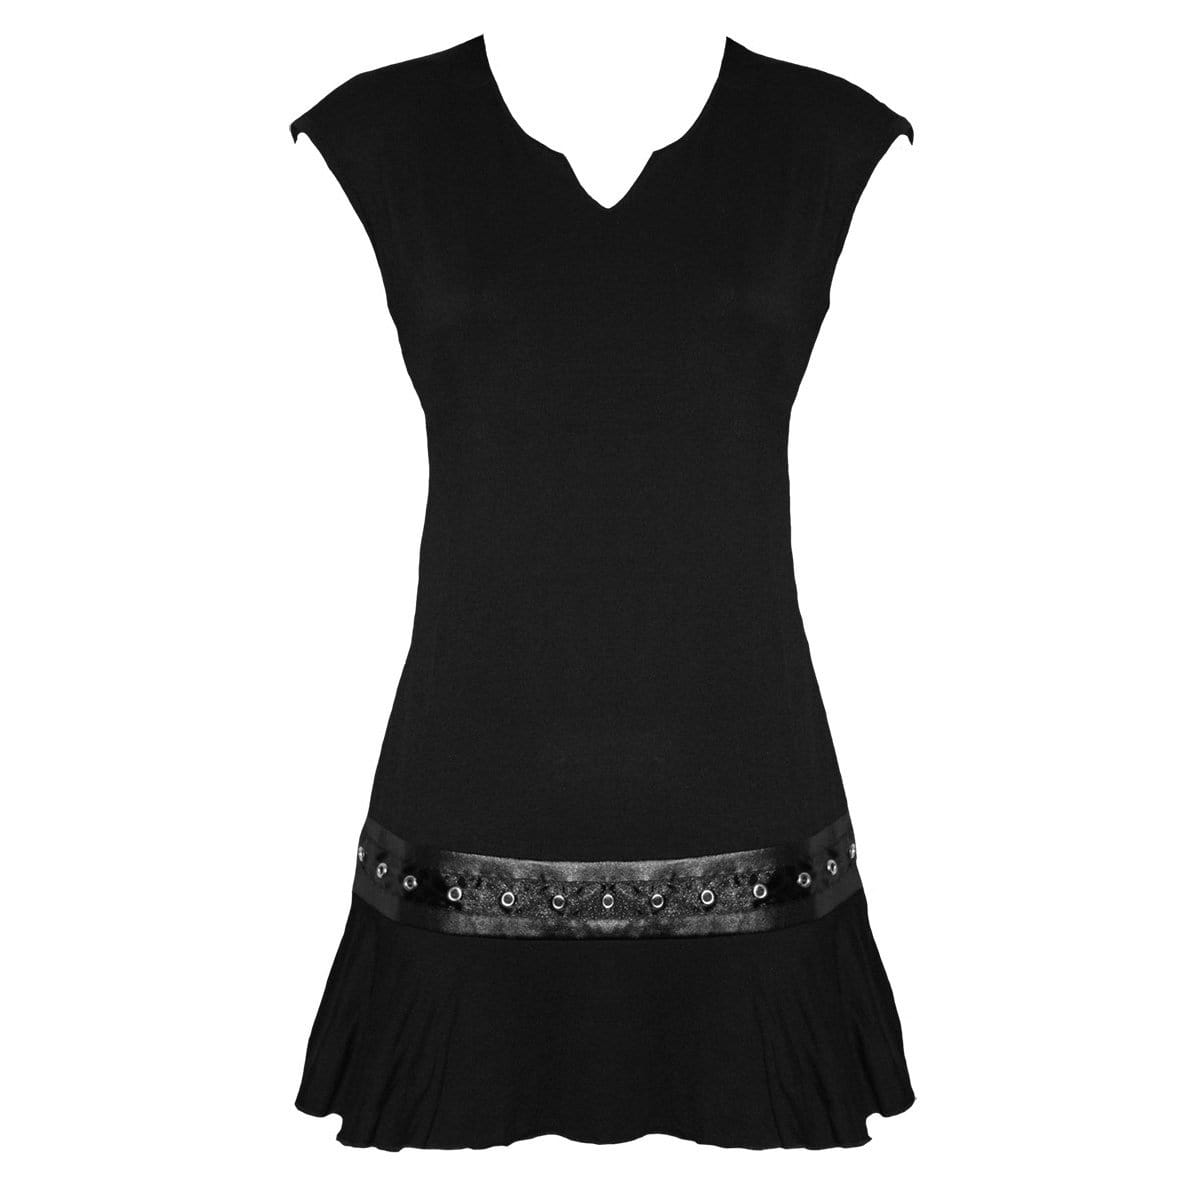 GOTHIC ROCK - Stud Waist Mini Dress Black - Spiral USA